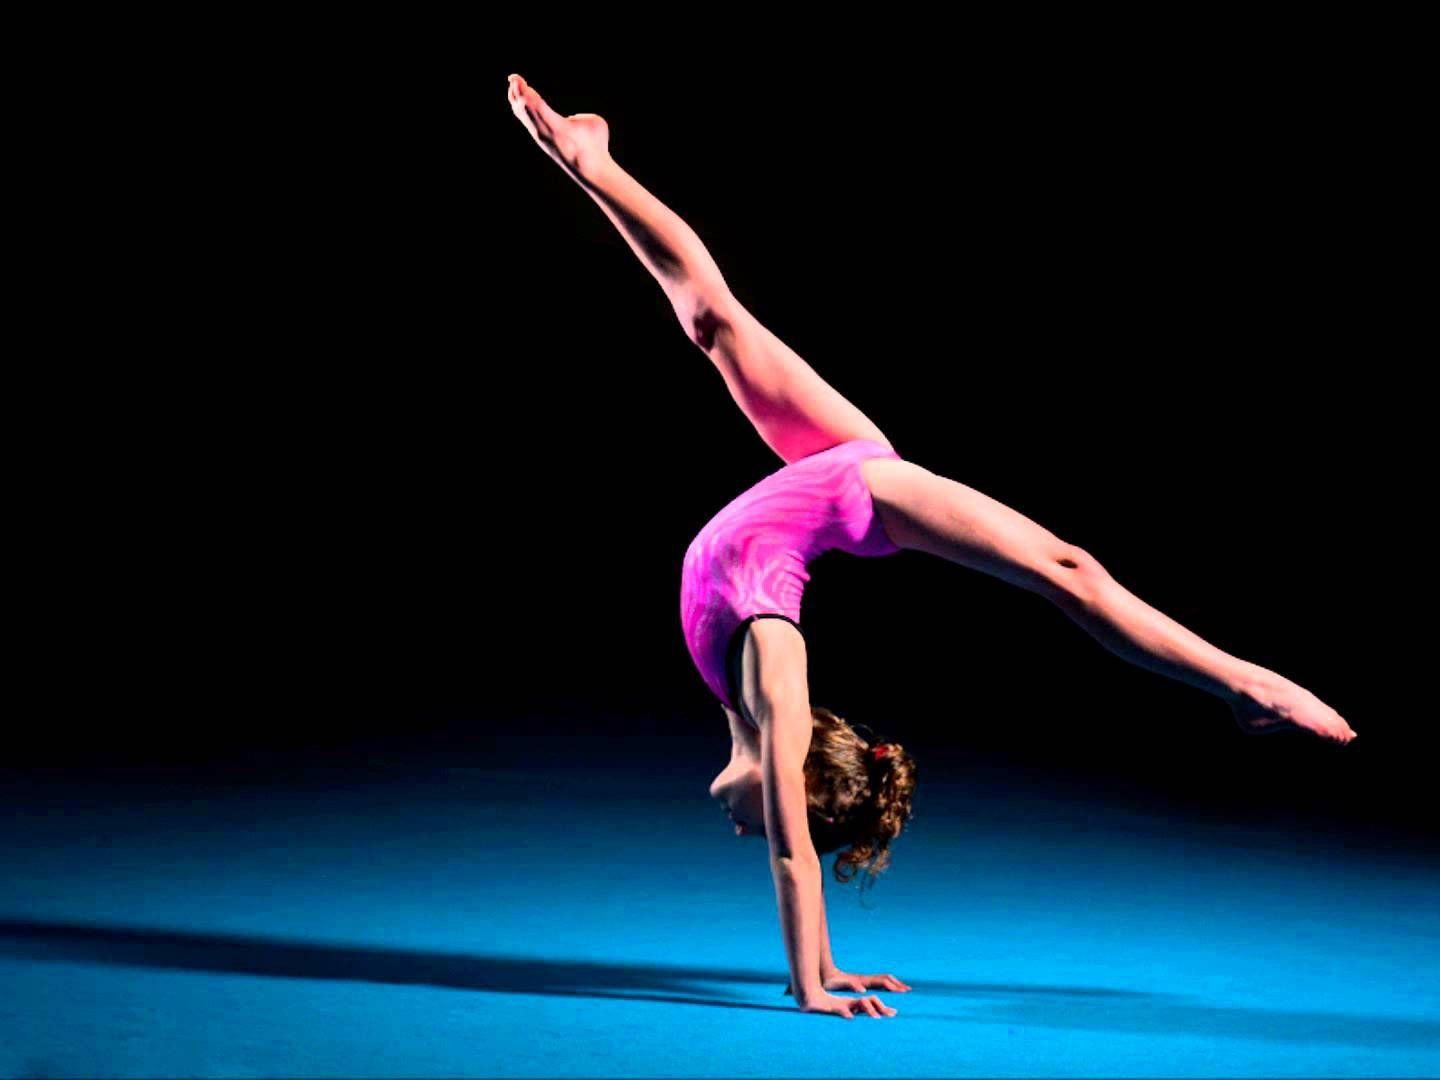 Gymnastics, a flexible approach to sport